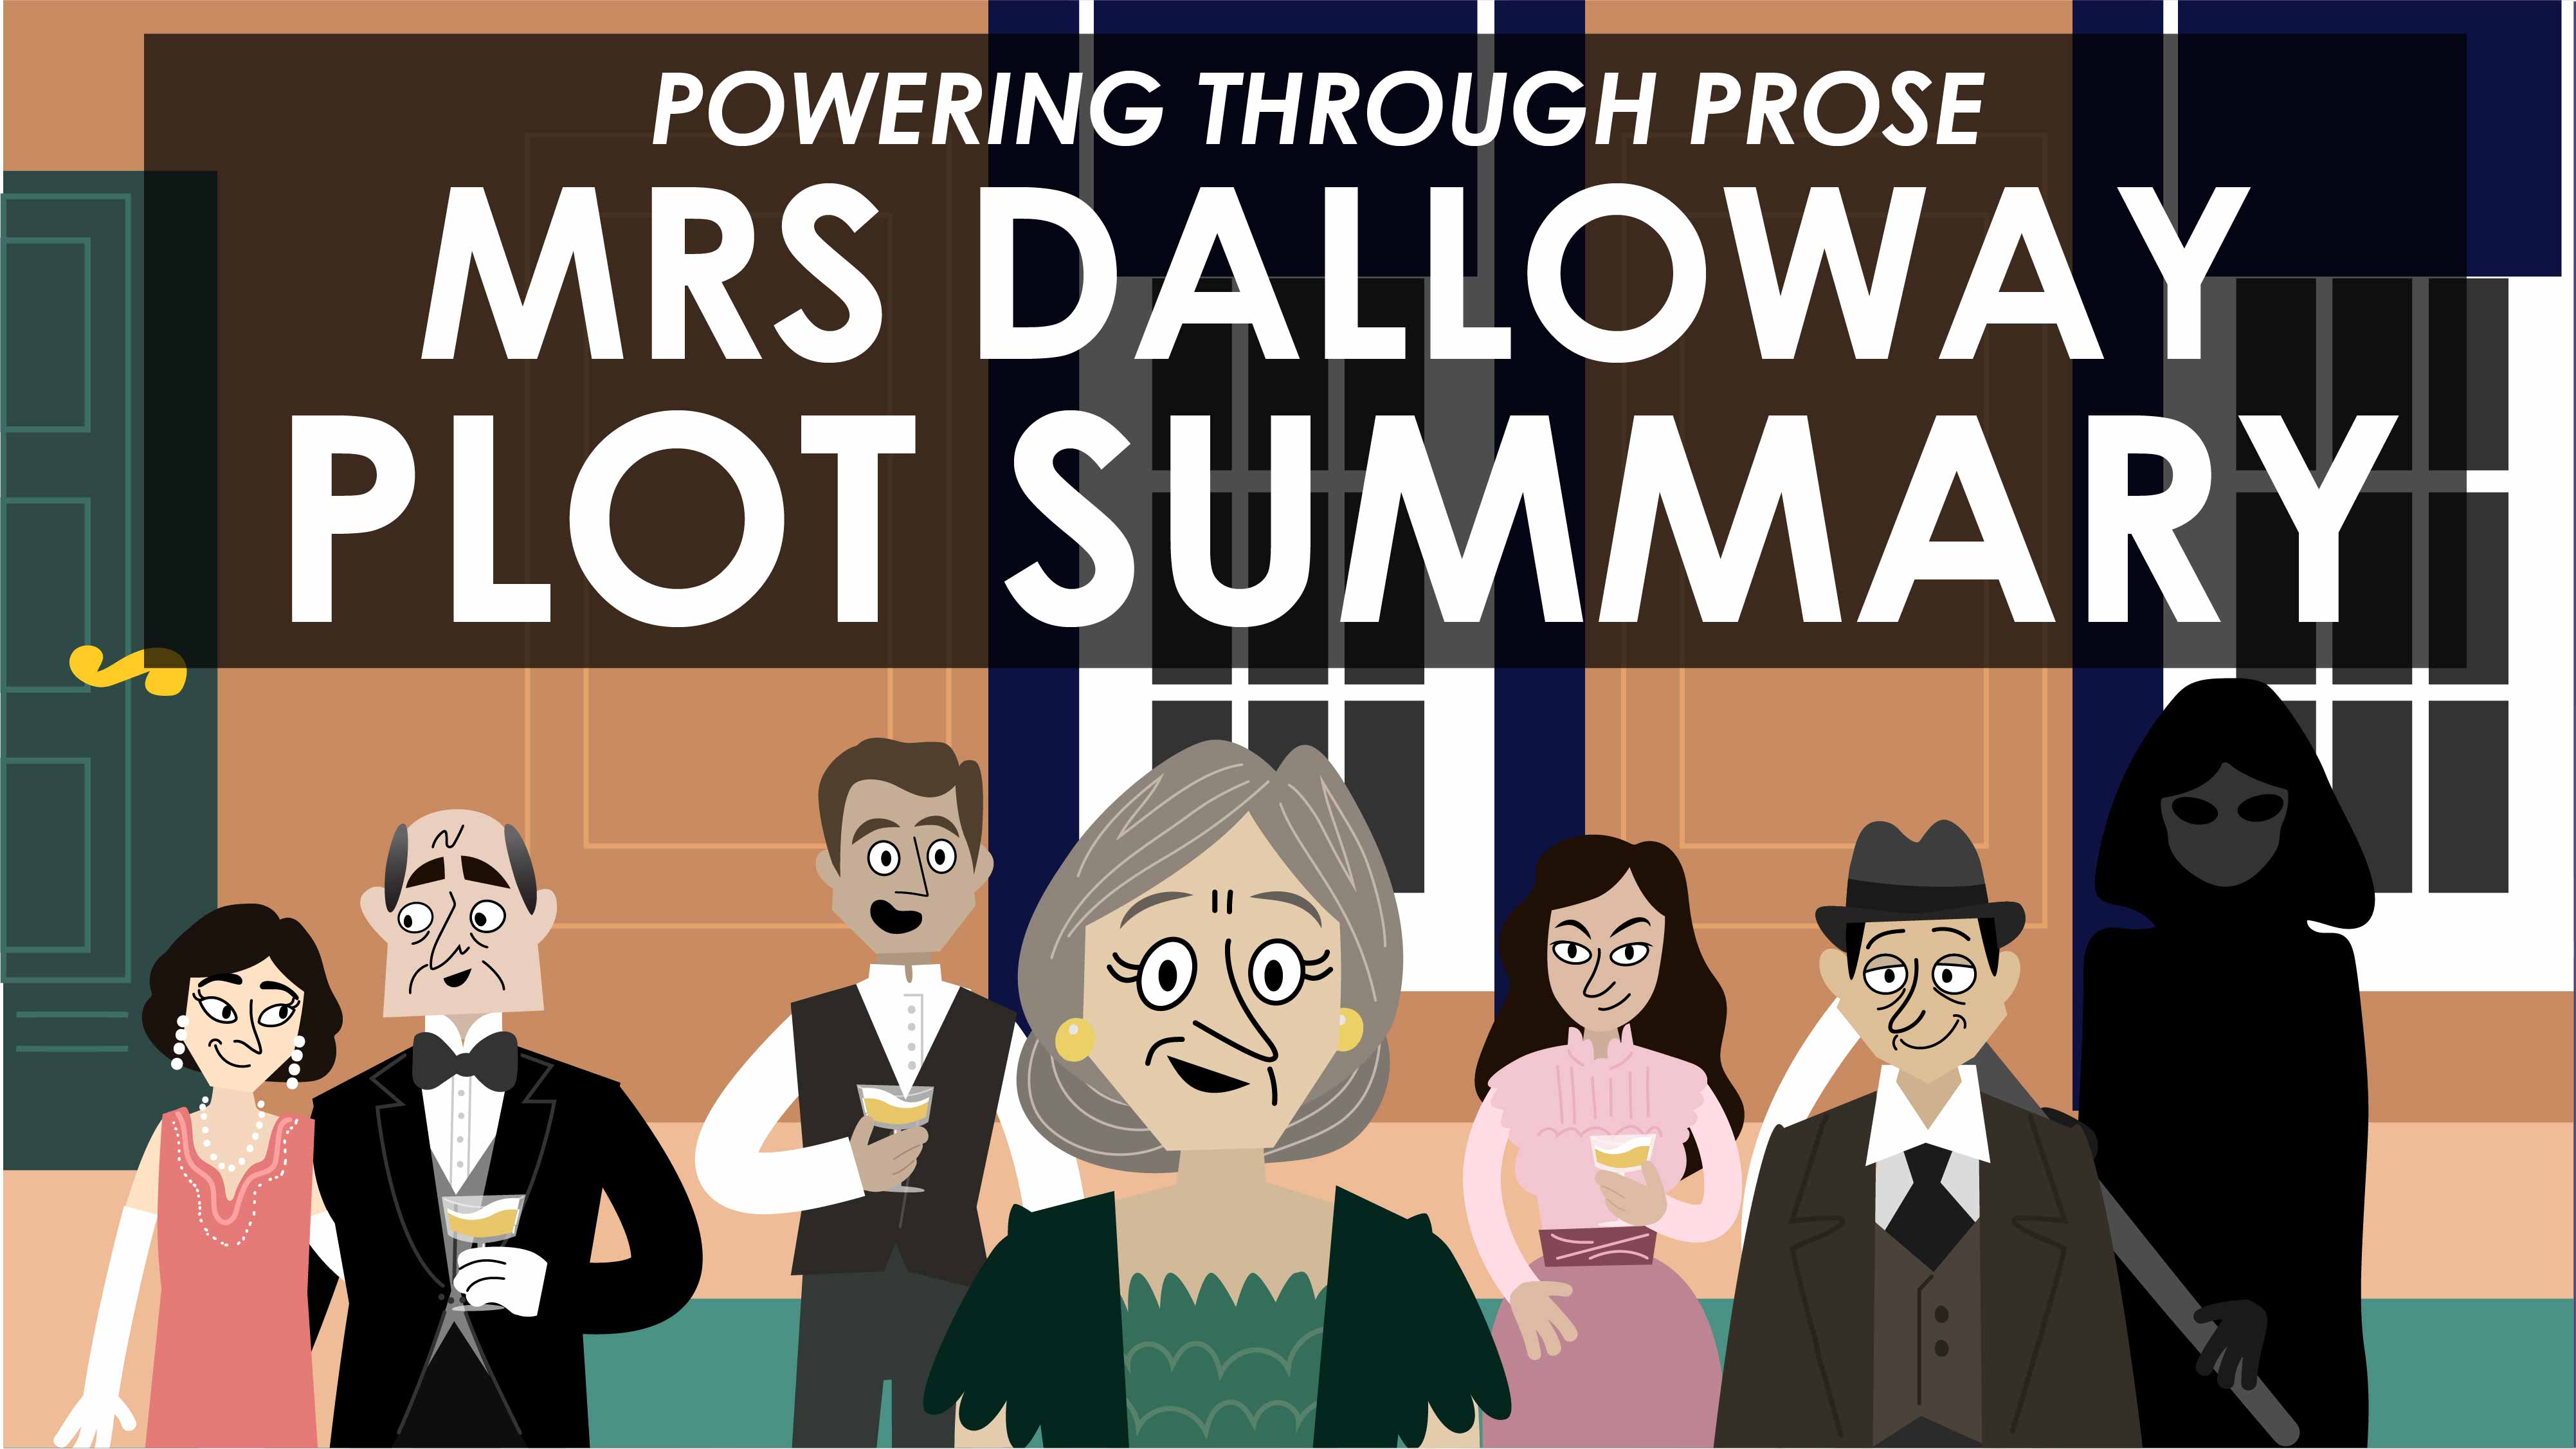 Mrs Dalloway - Virginia Woolf - Plot Summary - Powering Through Prose Series	